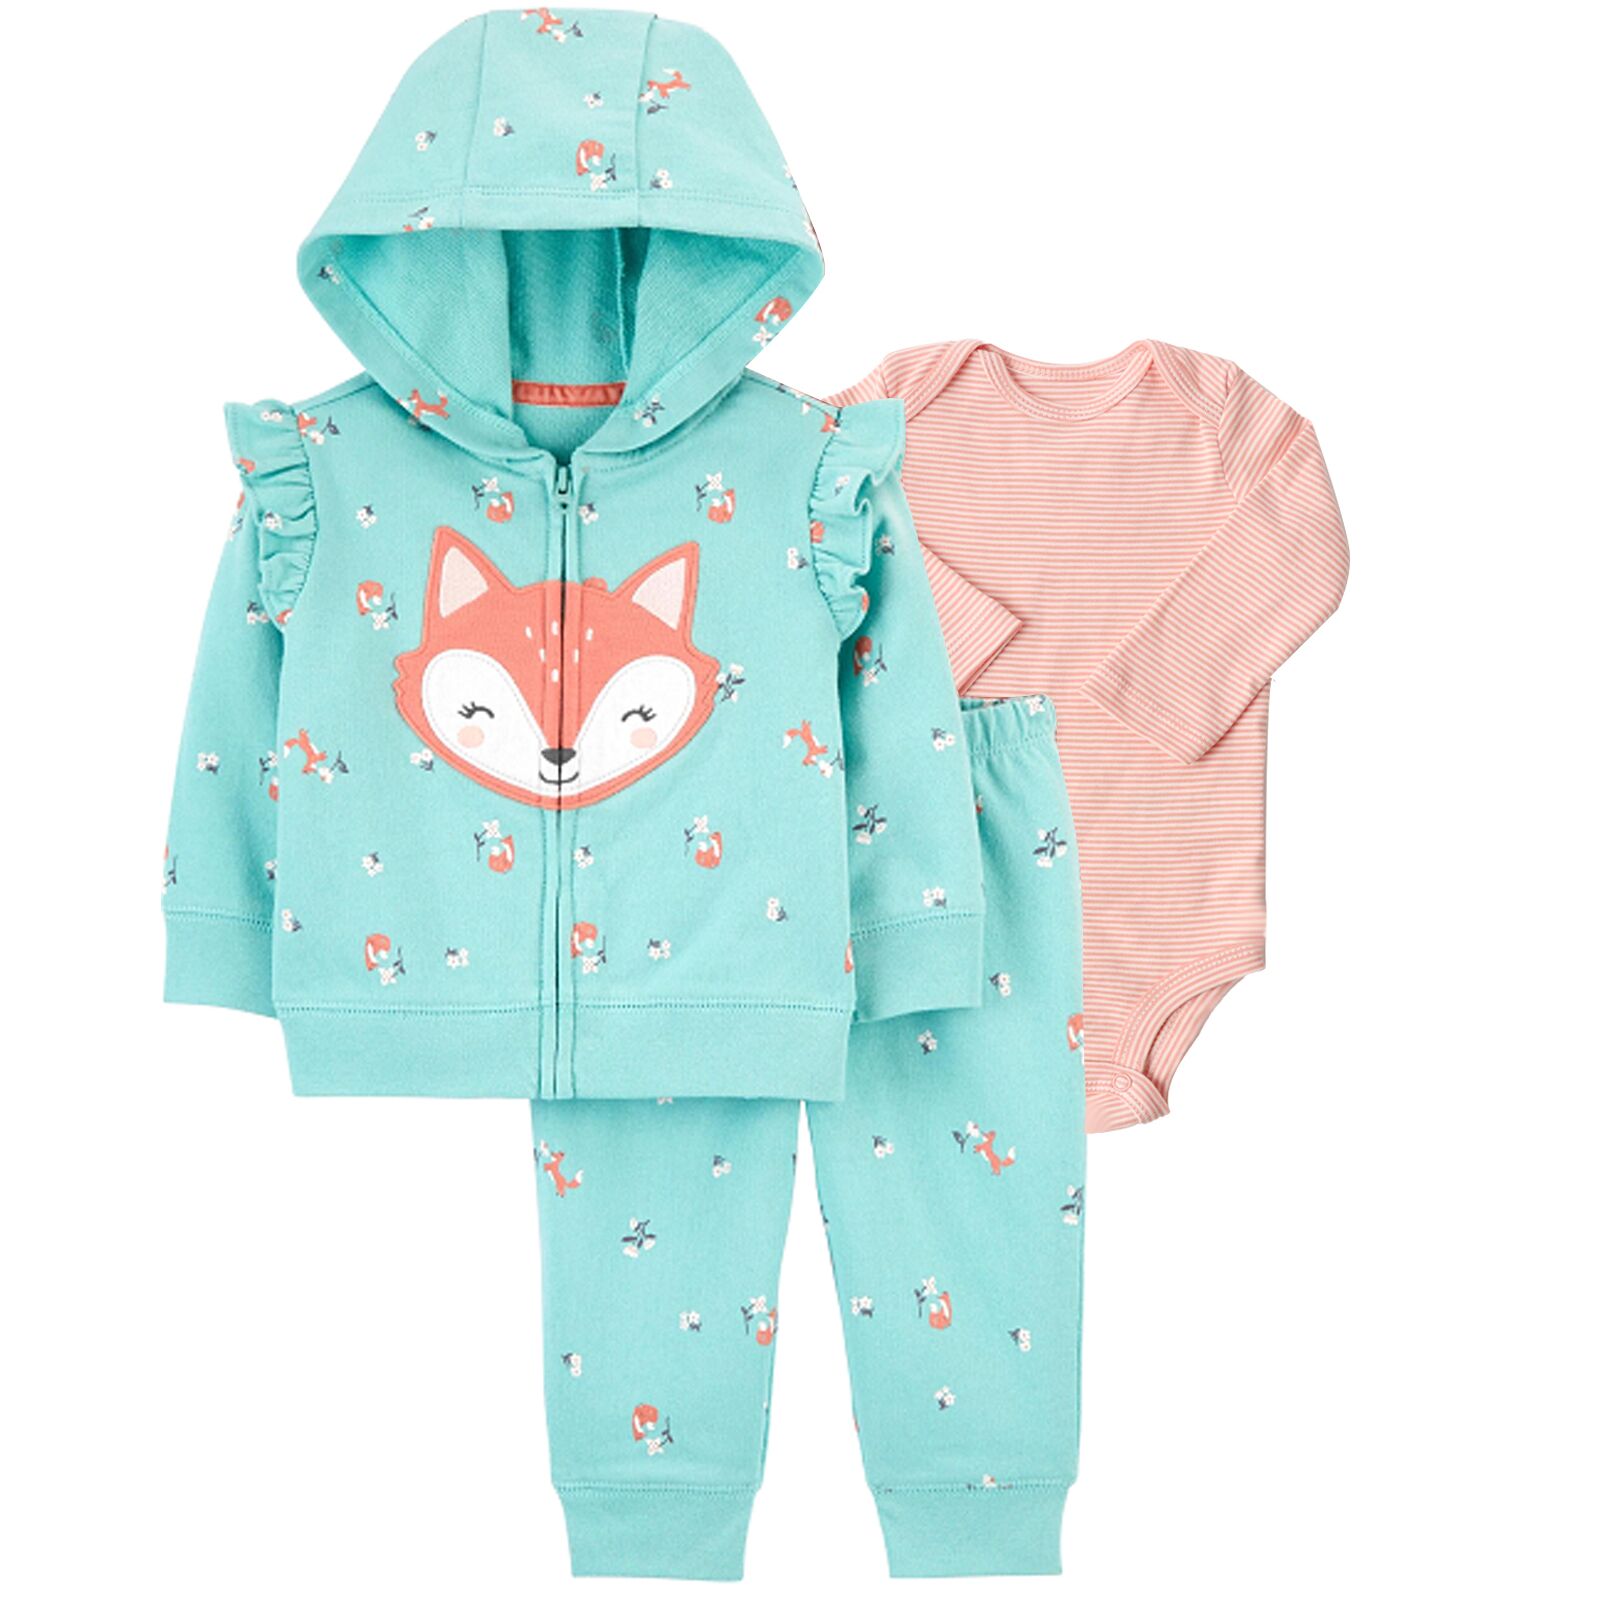 Autumn Infant Baby Cotton Long Sleeve Jumpsuit 3 pieces Fox Style